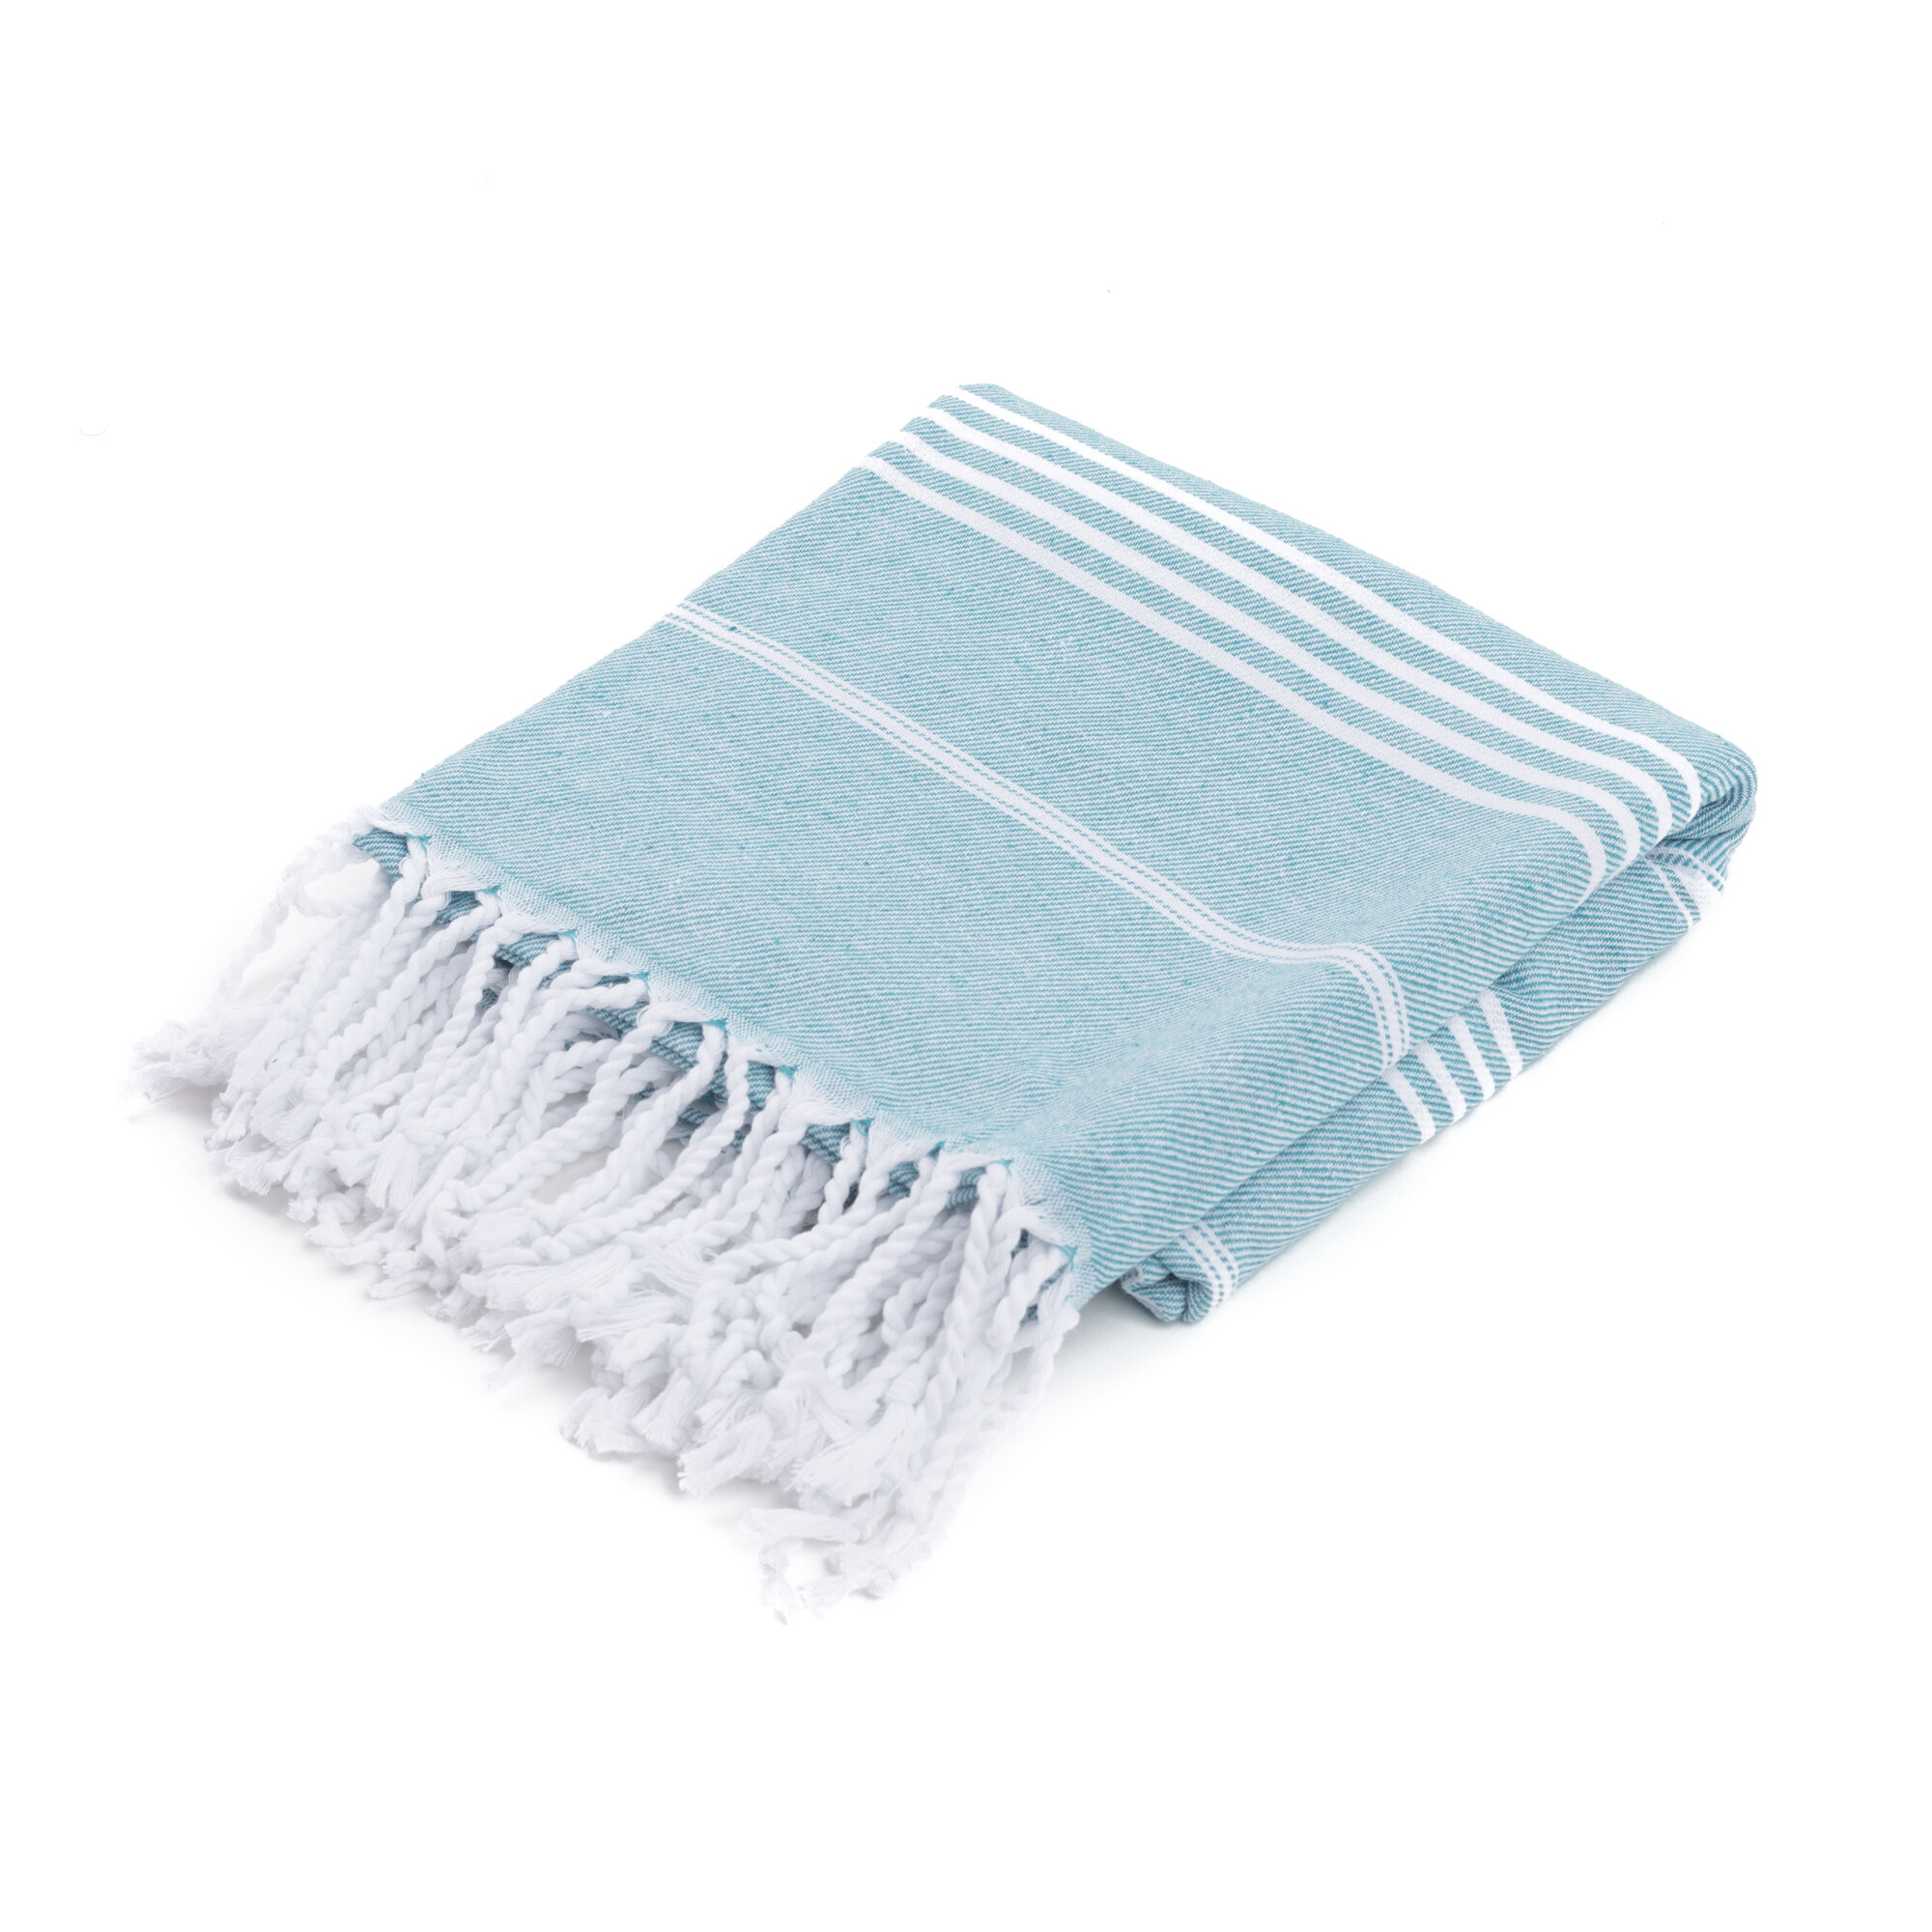 Turkish towel/ bath towels, thin Turkish towels 100% Cotton beach throw